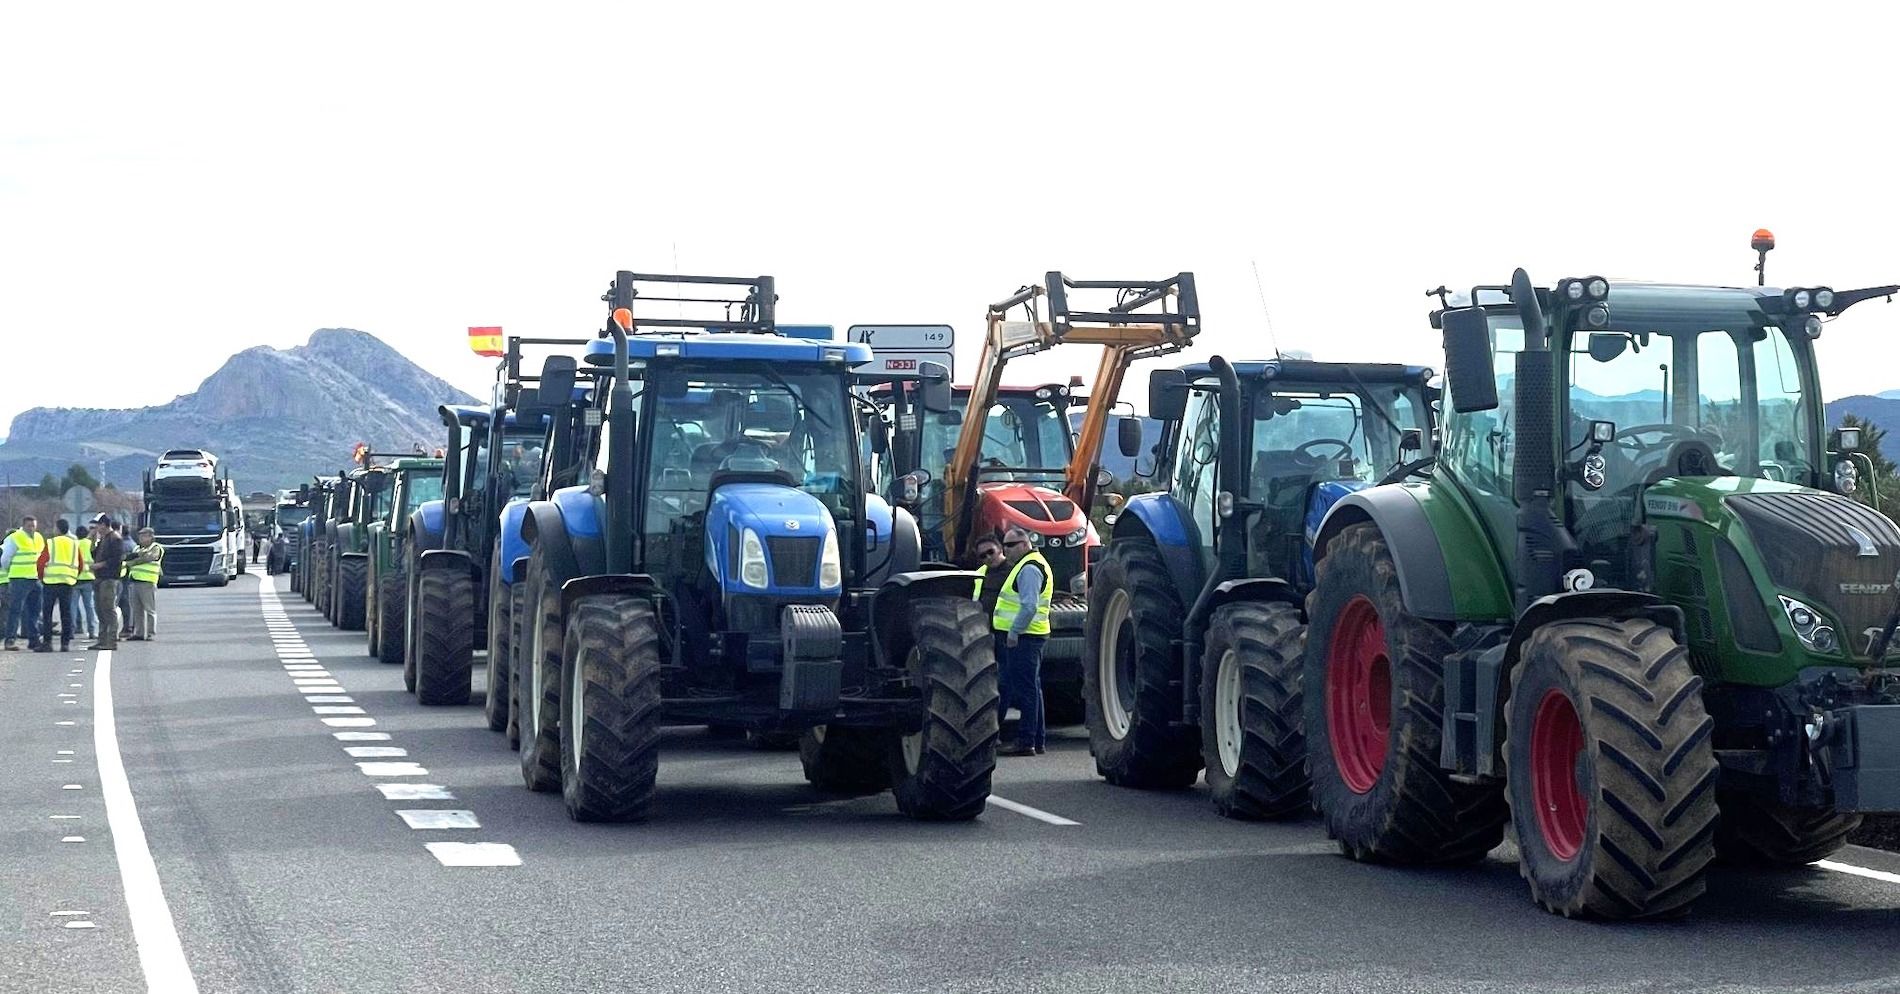 bloqueo carretera tractores protestas agricolas